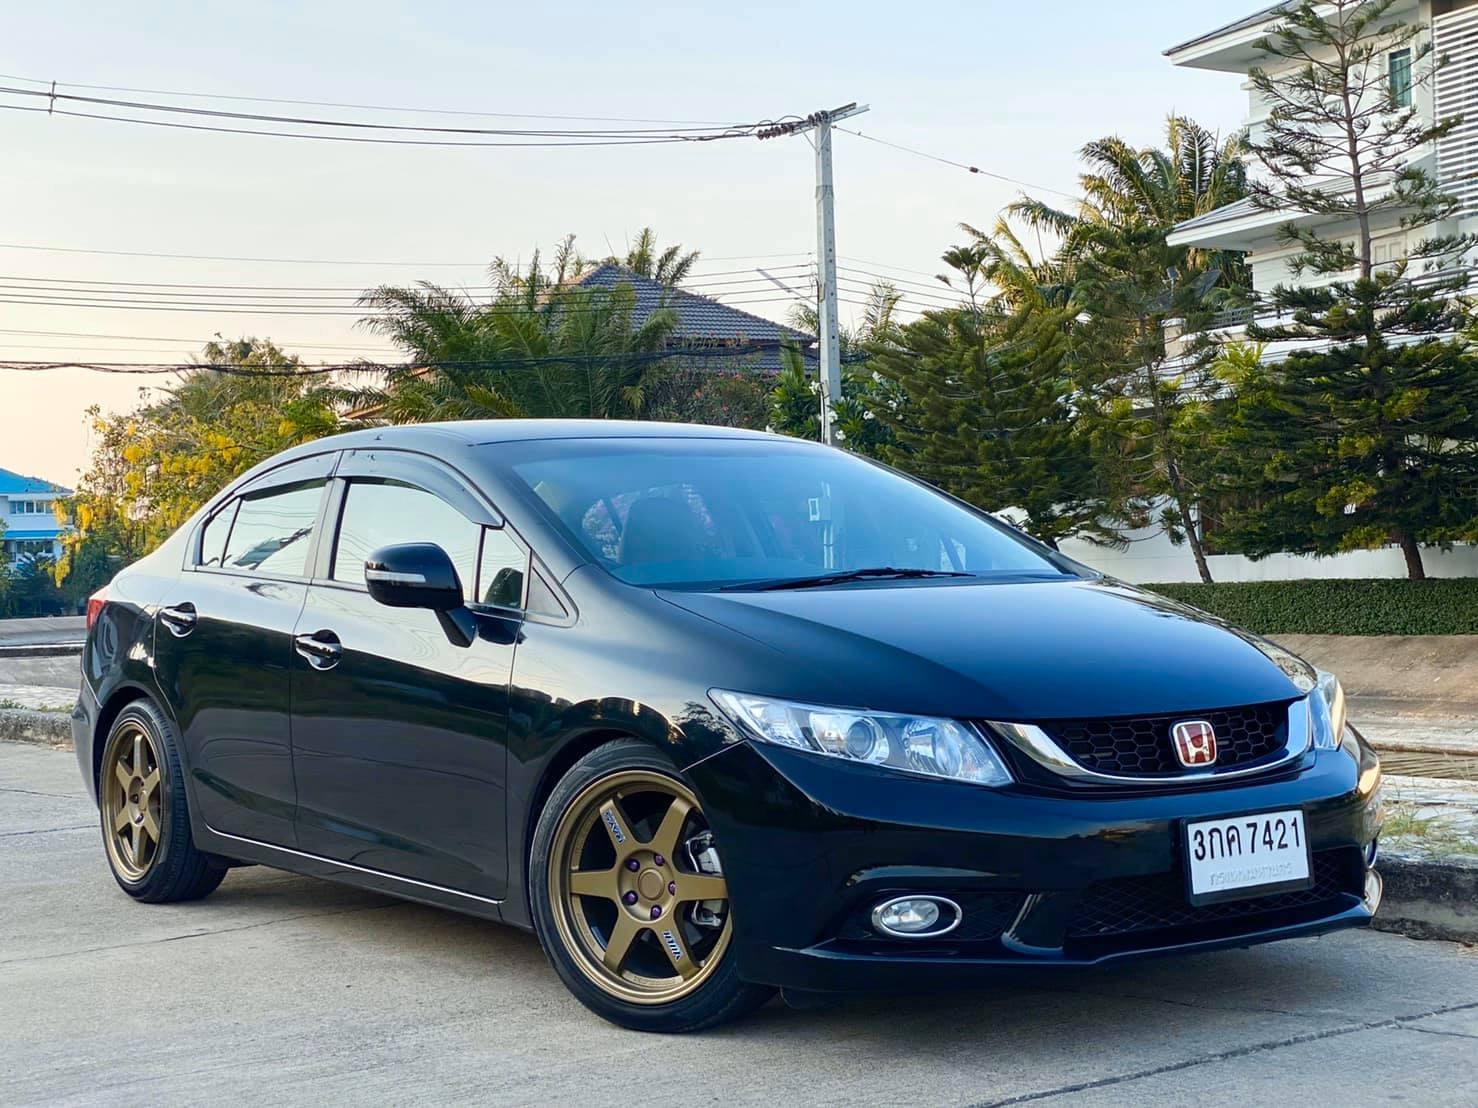 Honda Civic FB ปี 2014 สีดำ